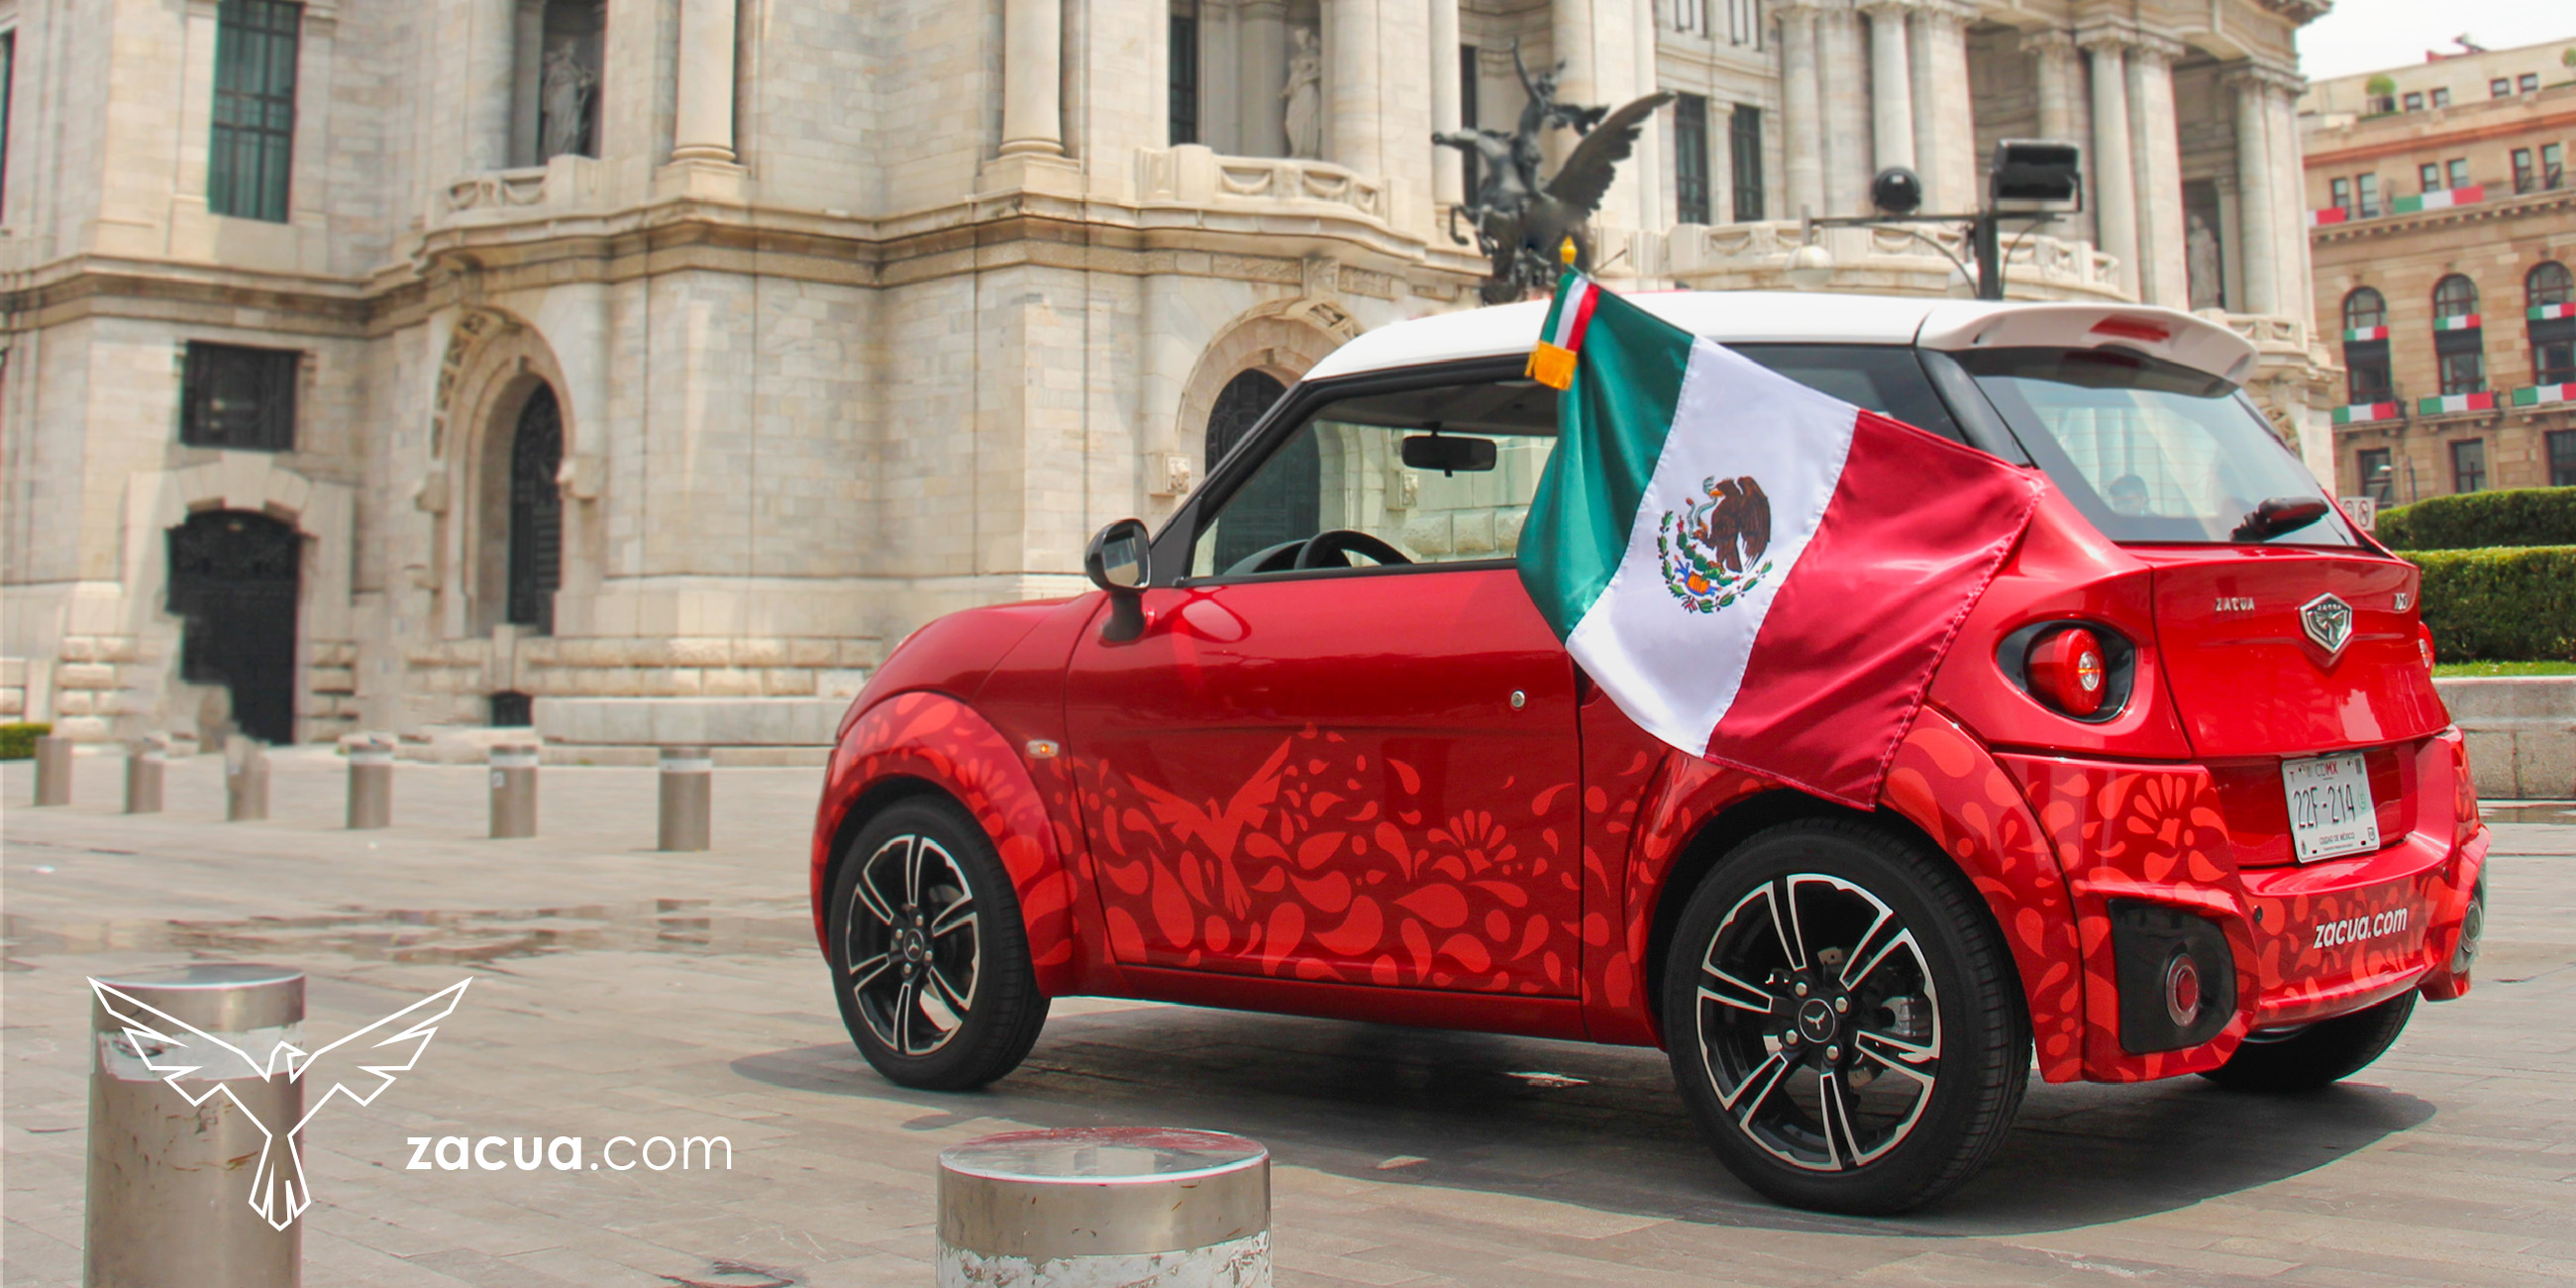 Automóvil eléctrico Zacua hecho en México.
(Foto: Twitter Zacua)